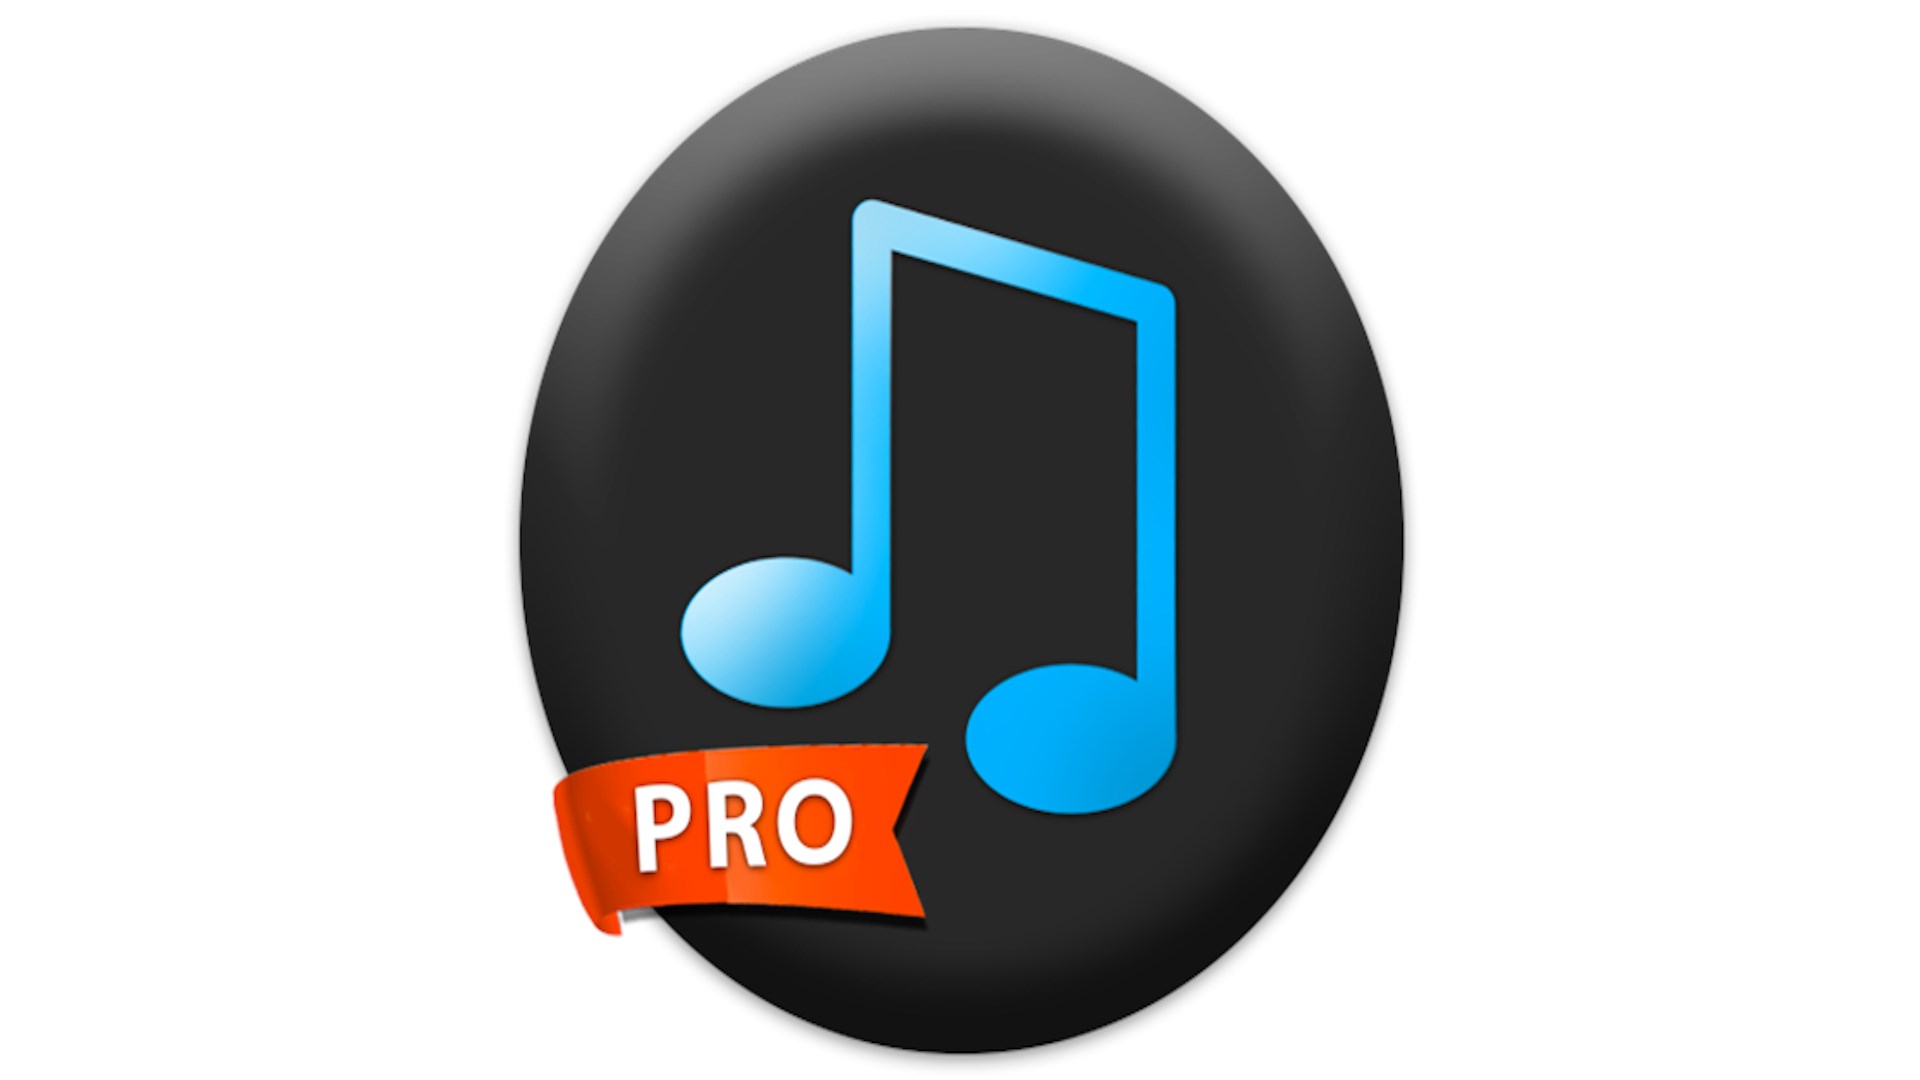 free mp3 music downloads